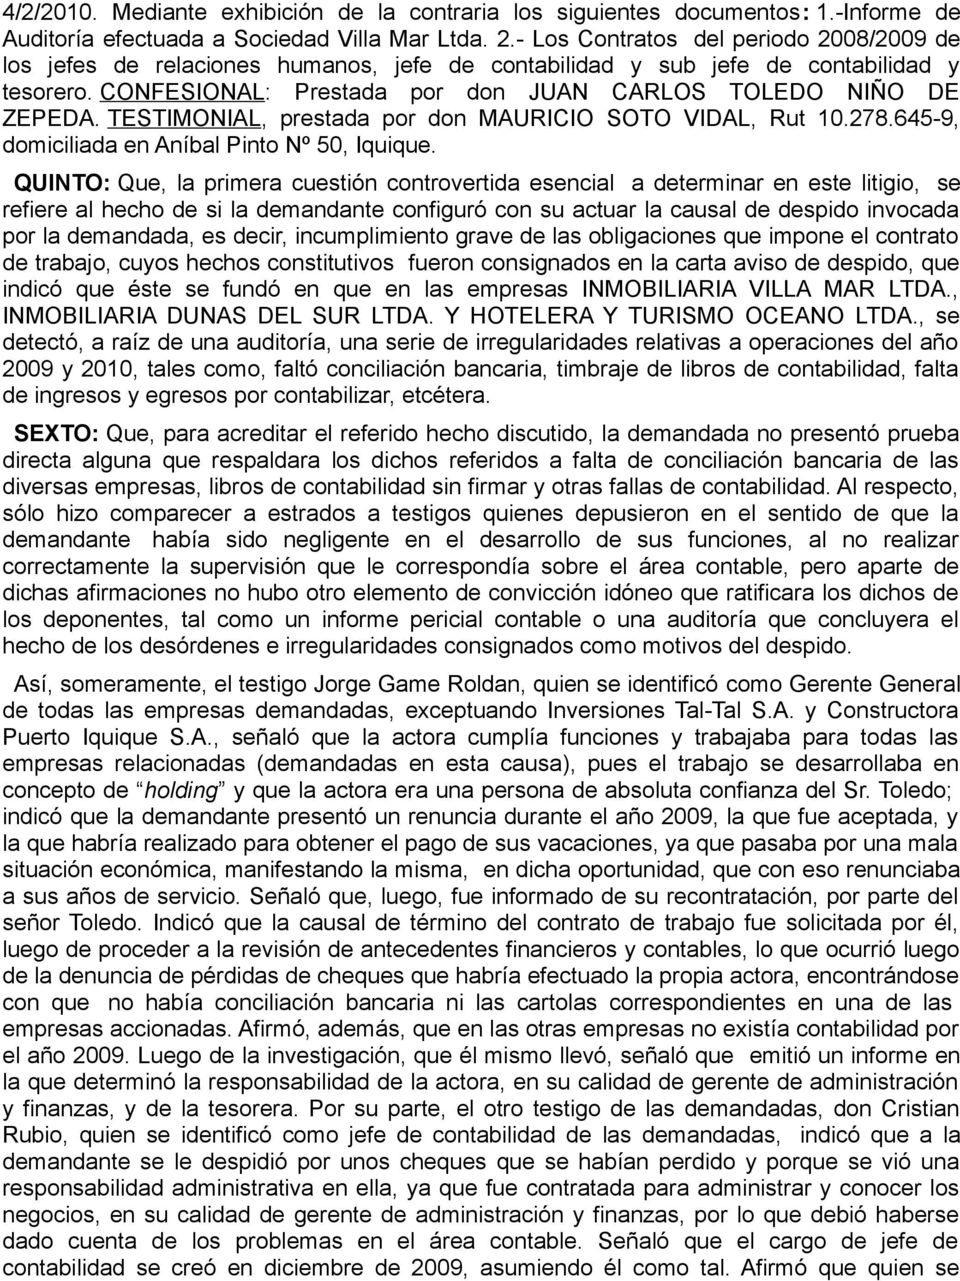 TESTIMONIAL, prestada por don MAURICIO SOTO VIDAL, Rut 10.278.645-9, domiciliada en Aníbal Pinto Nº 50, Iquique.